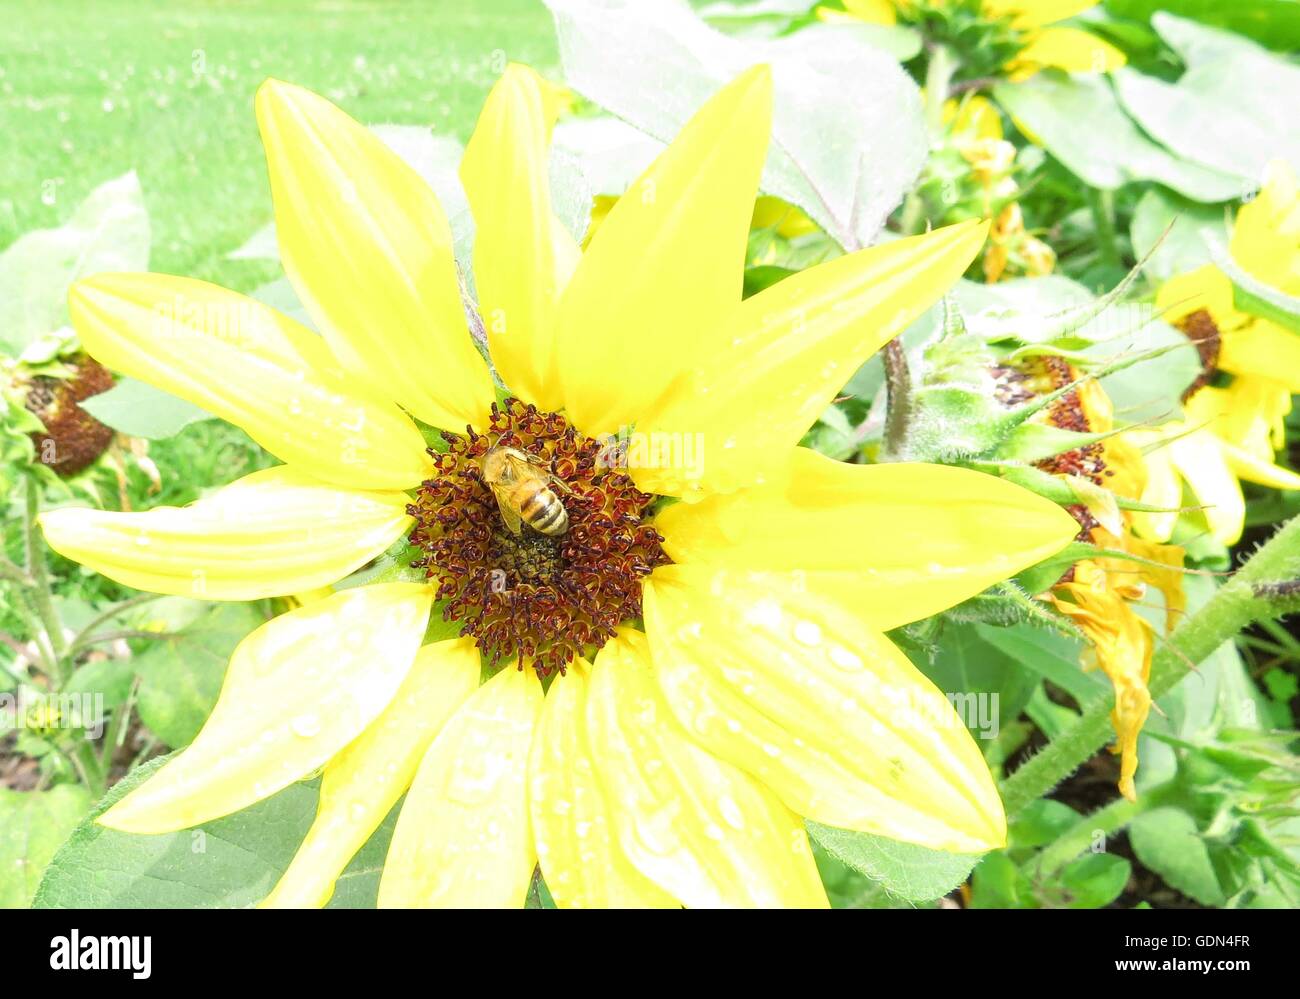 honey bee sipping nectar on a yellow daisy Stock Photo